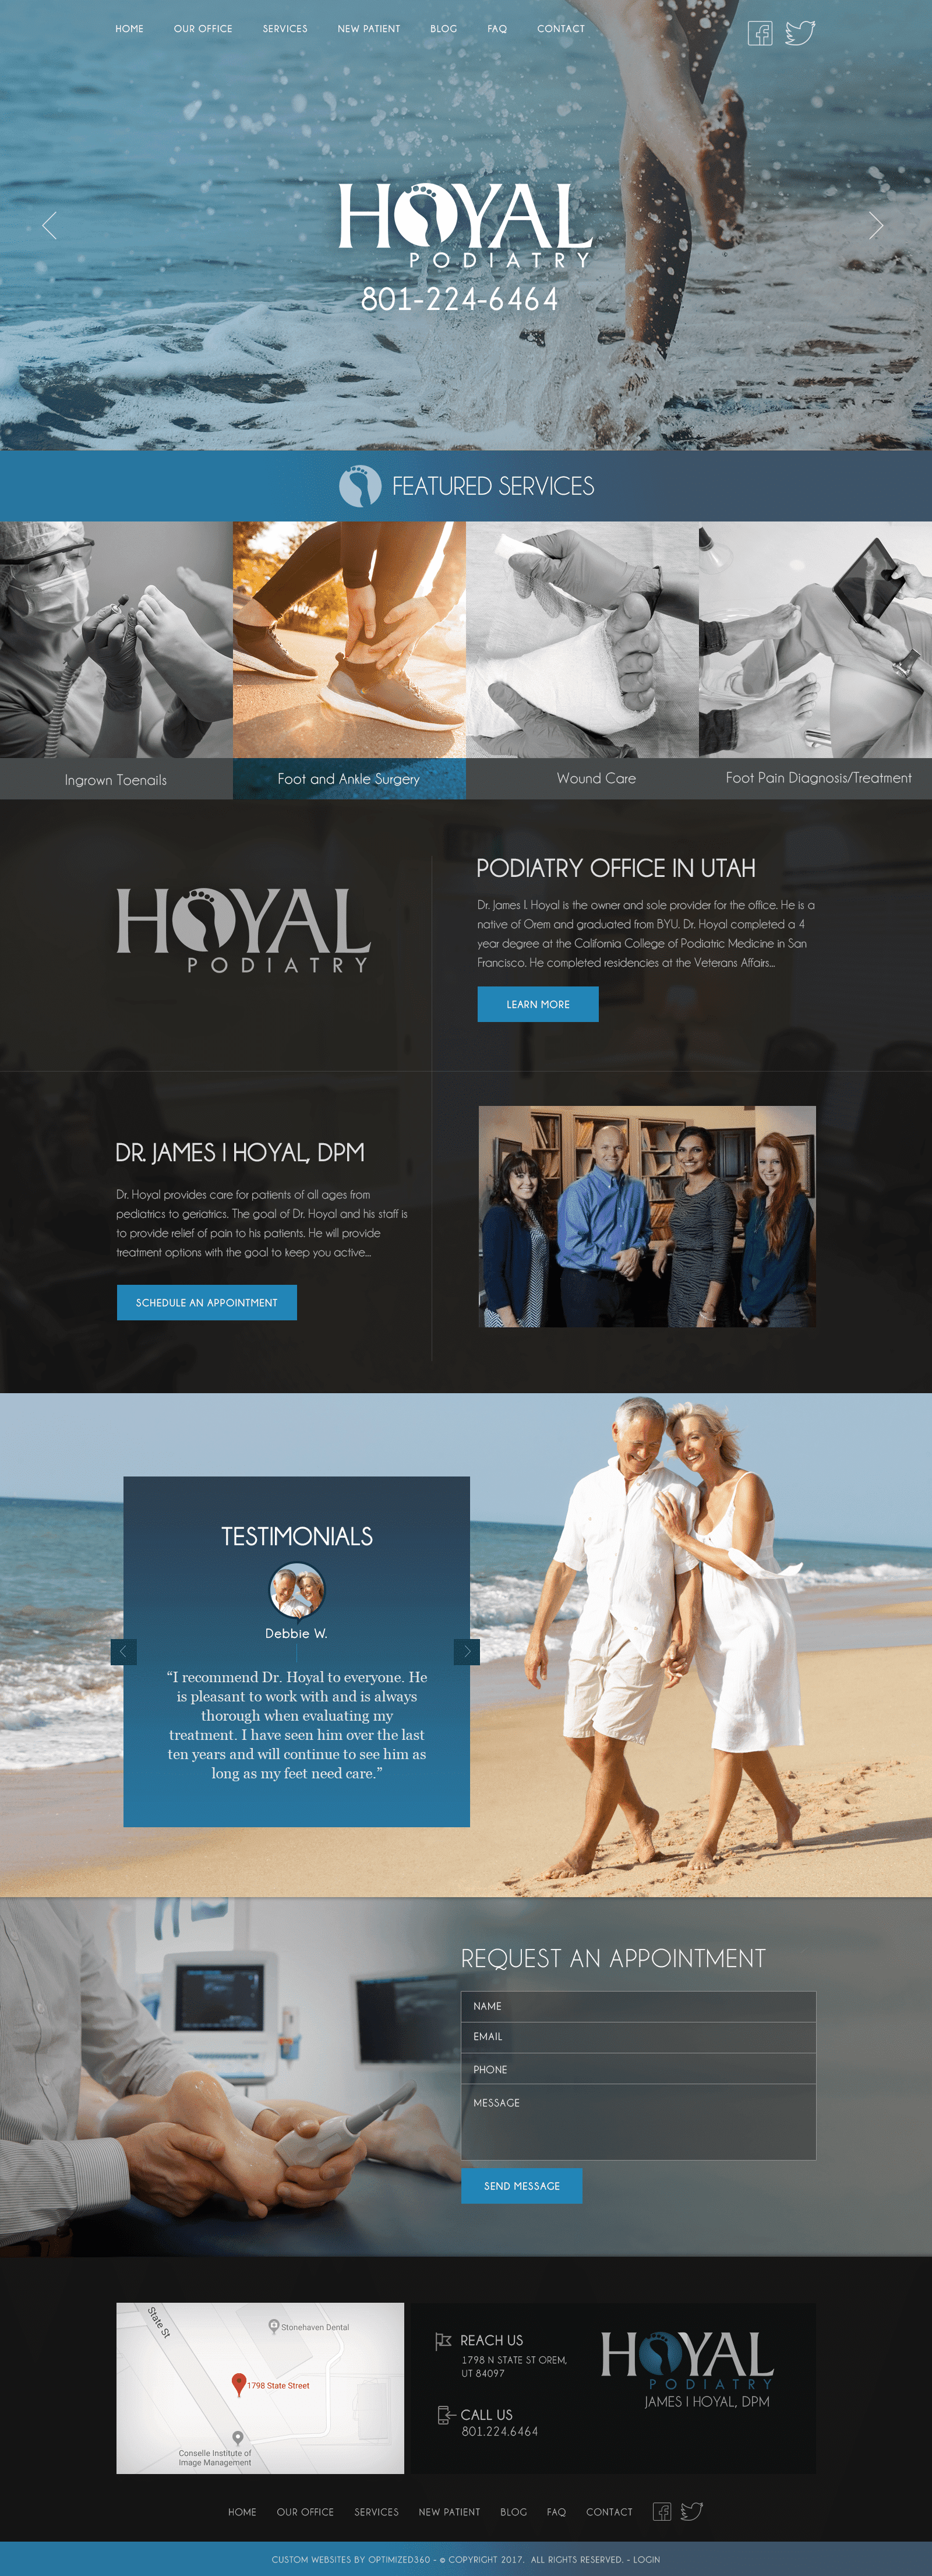 Hoyal Podiatry Website